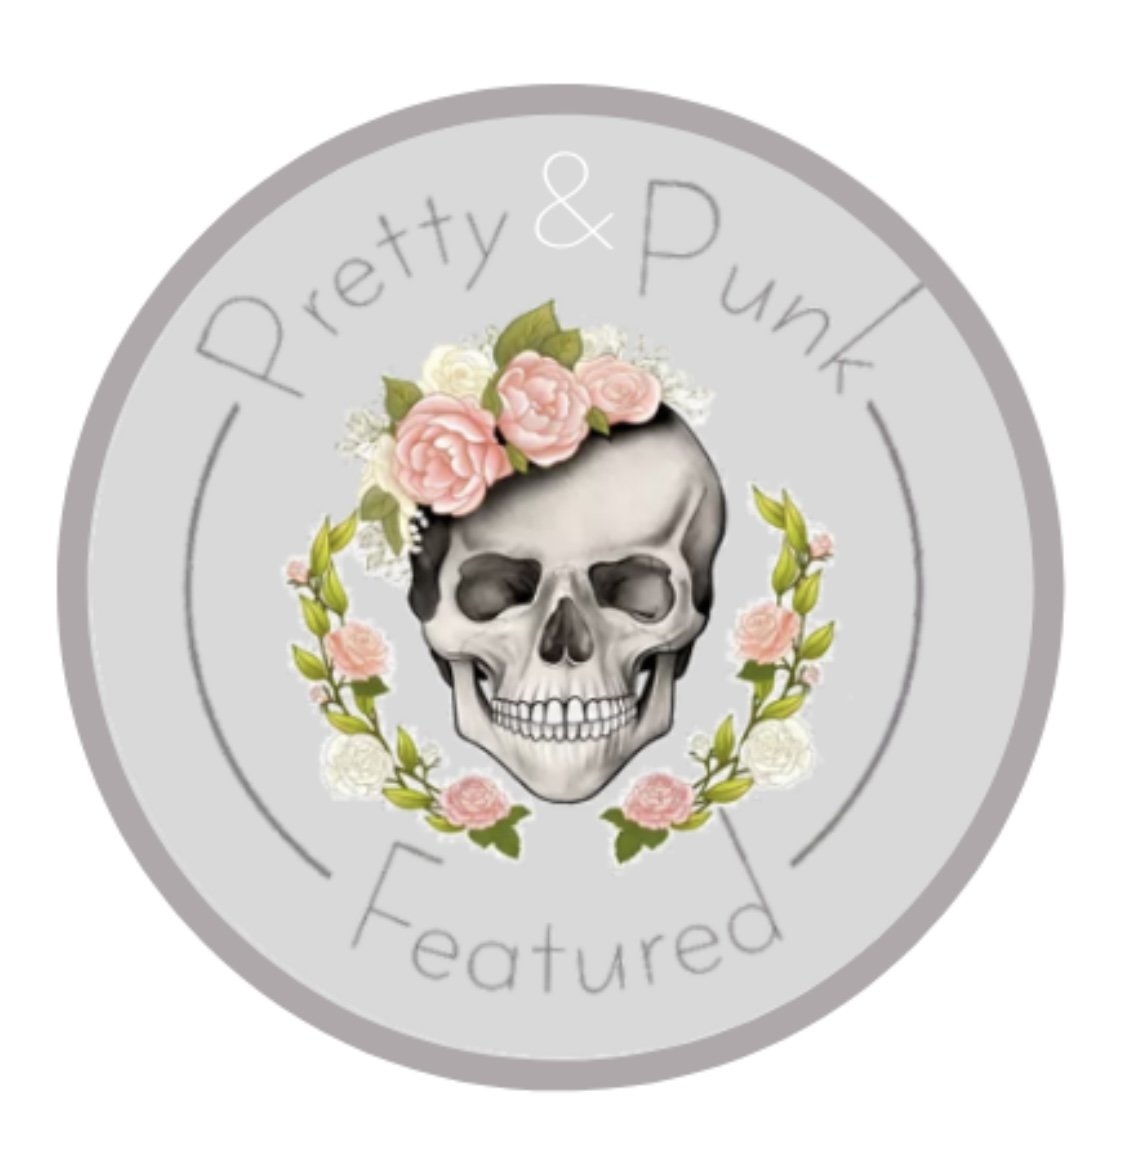 Pretty & Punk - Featured November 2022